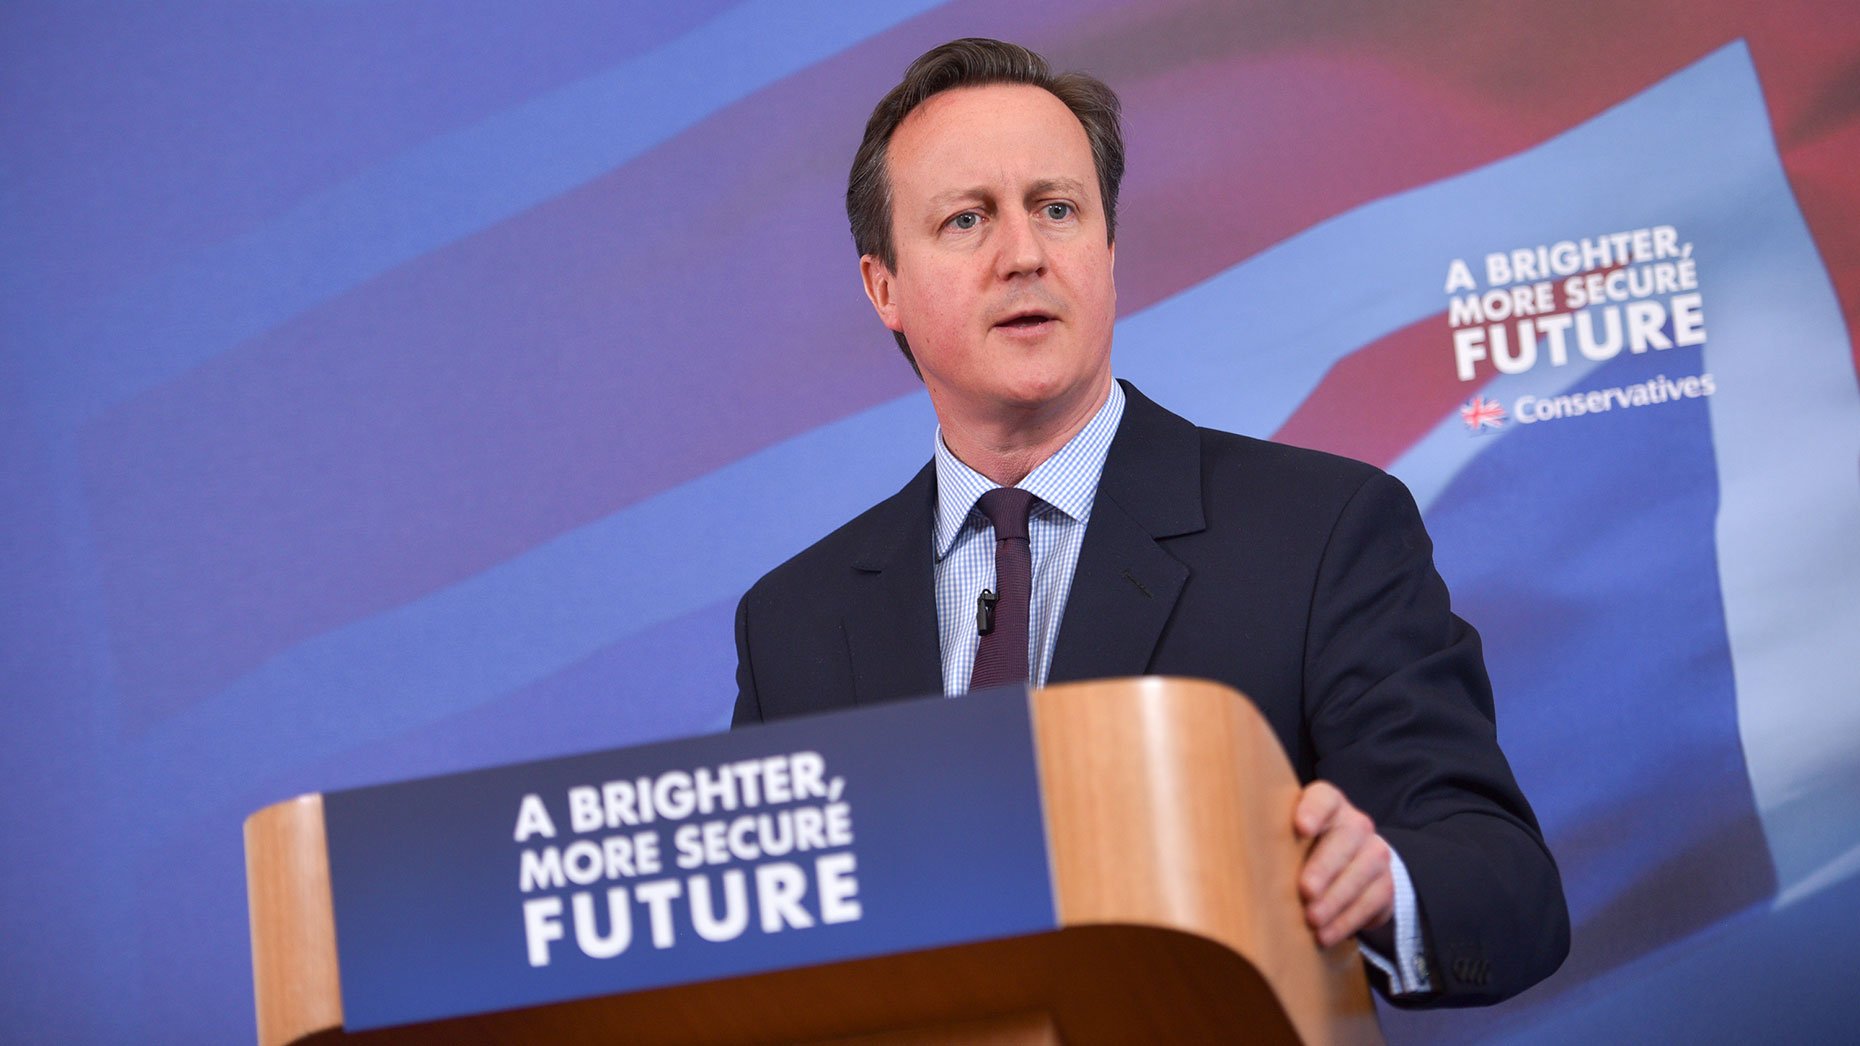 Prime Minister David Cameron. Photo: Steve Smailes for The Lincolnite